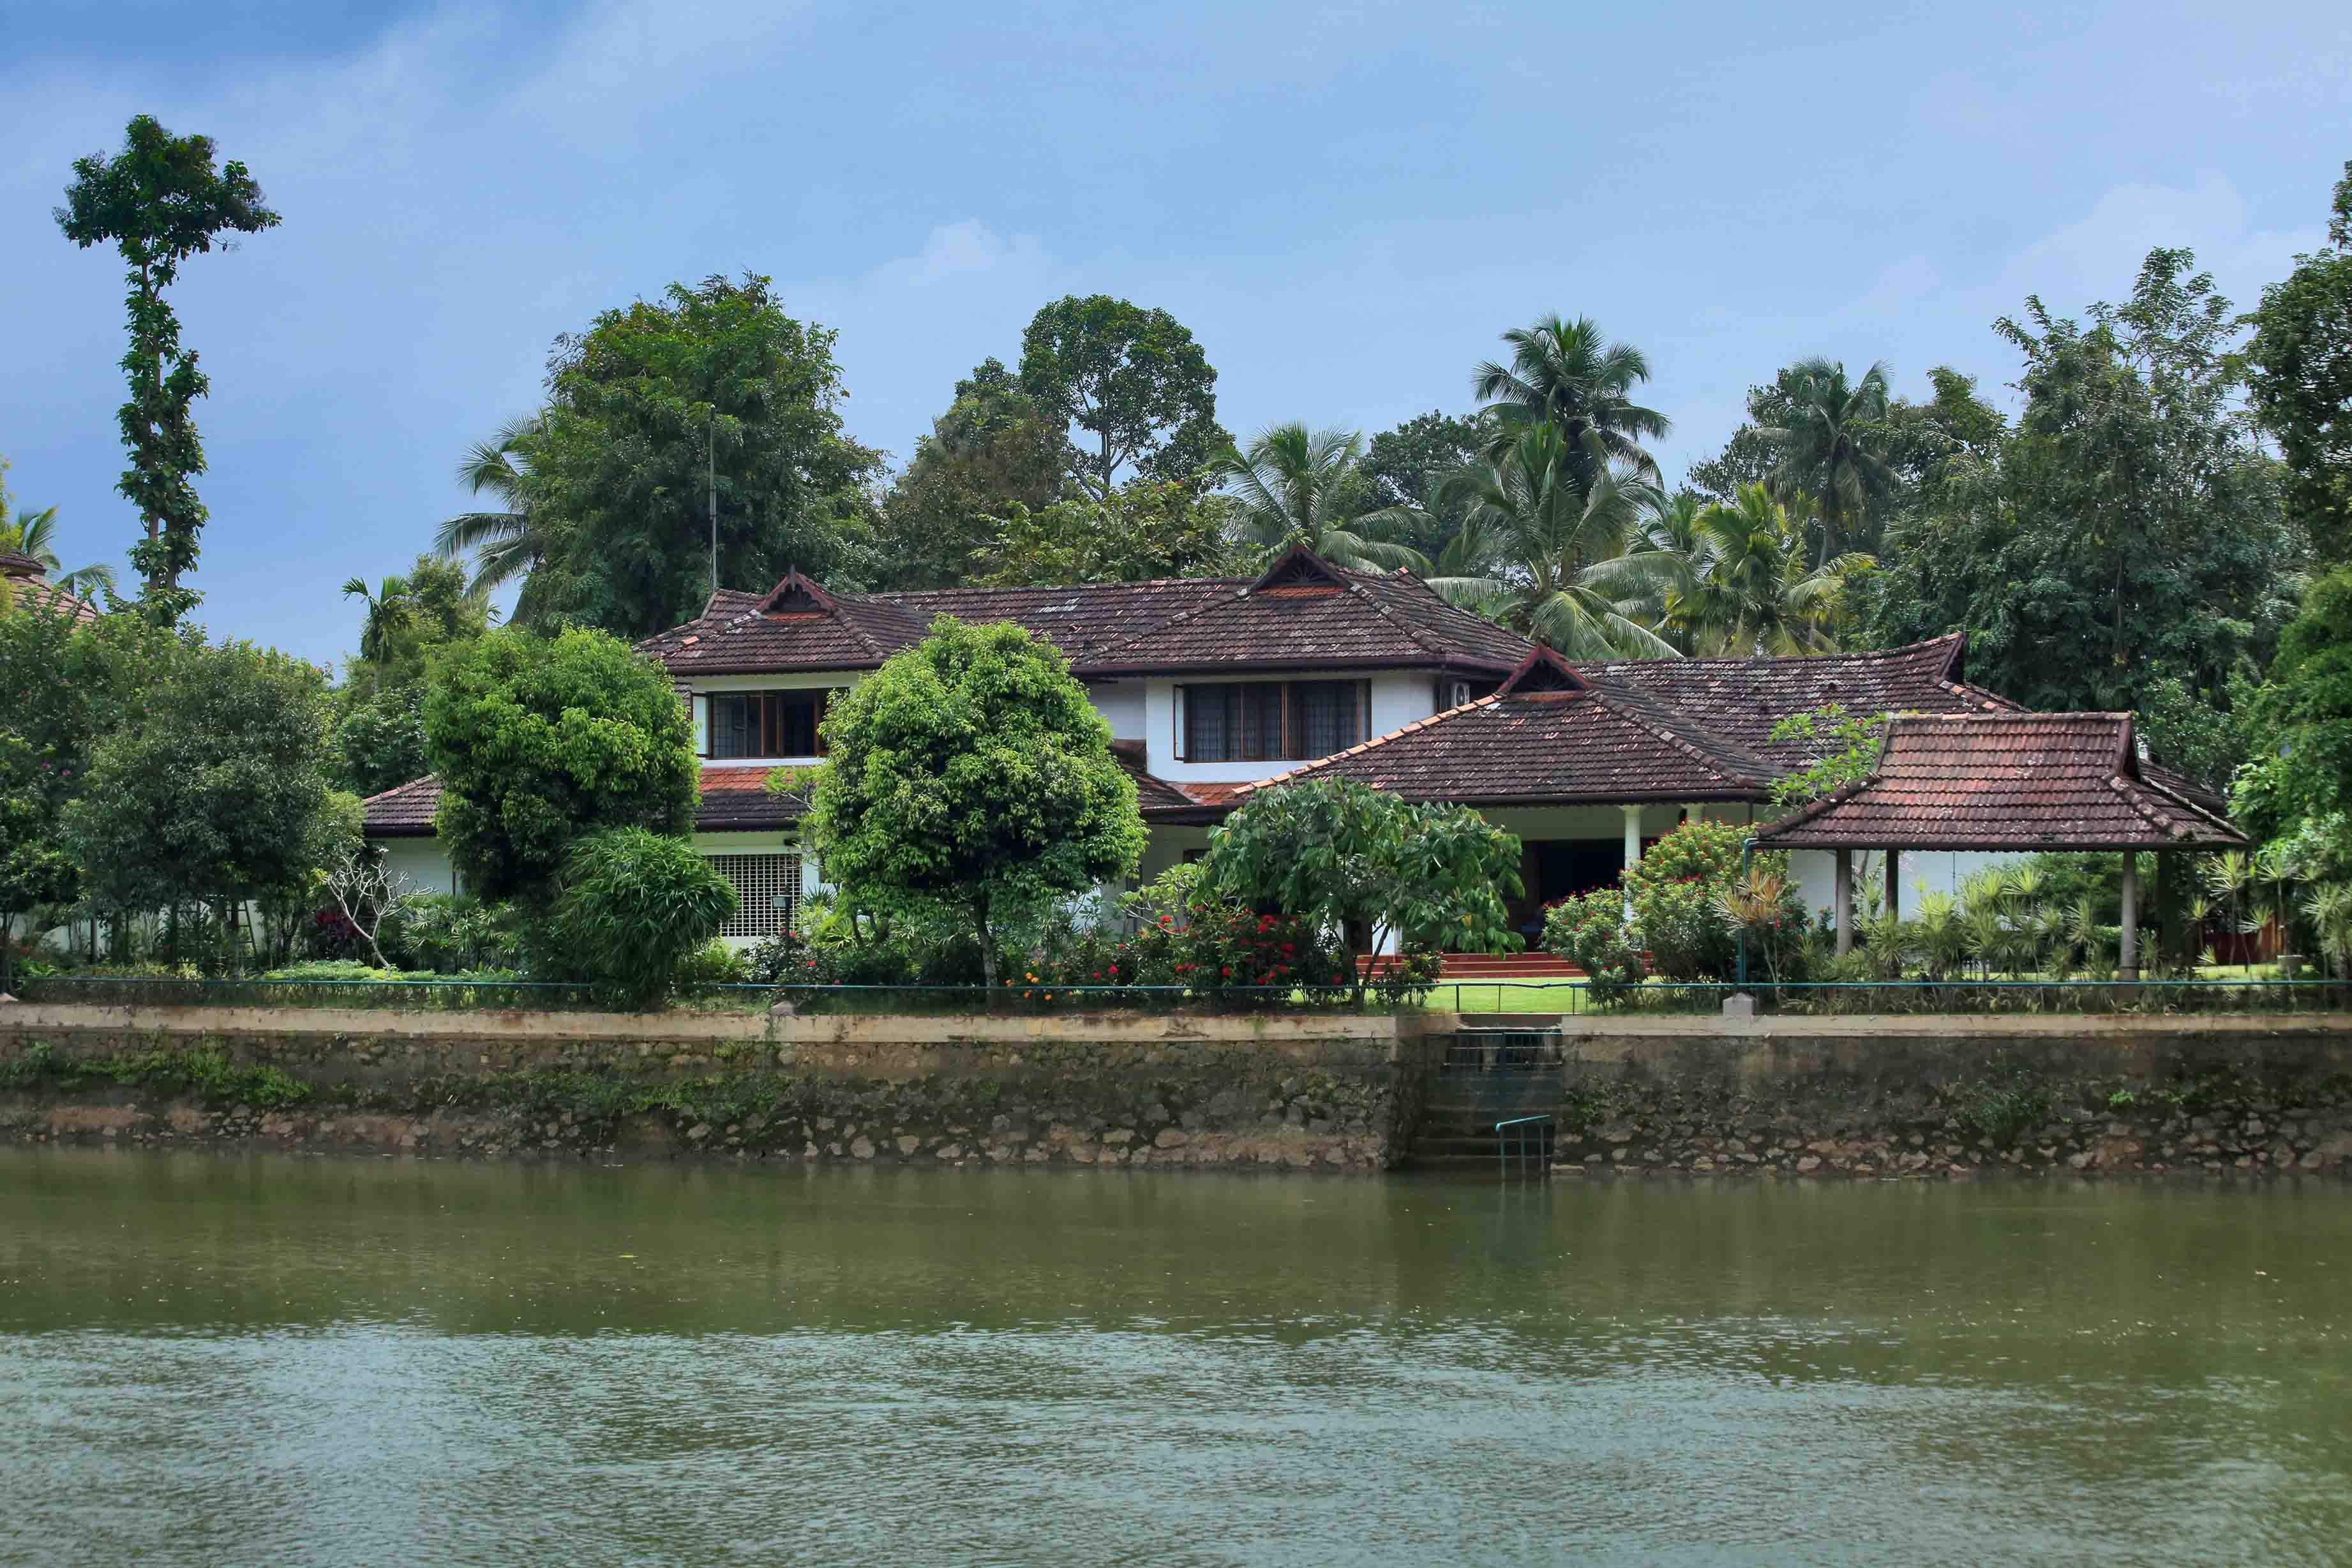 Jacob Mathew’s Residence At Kottayam